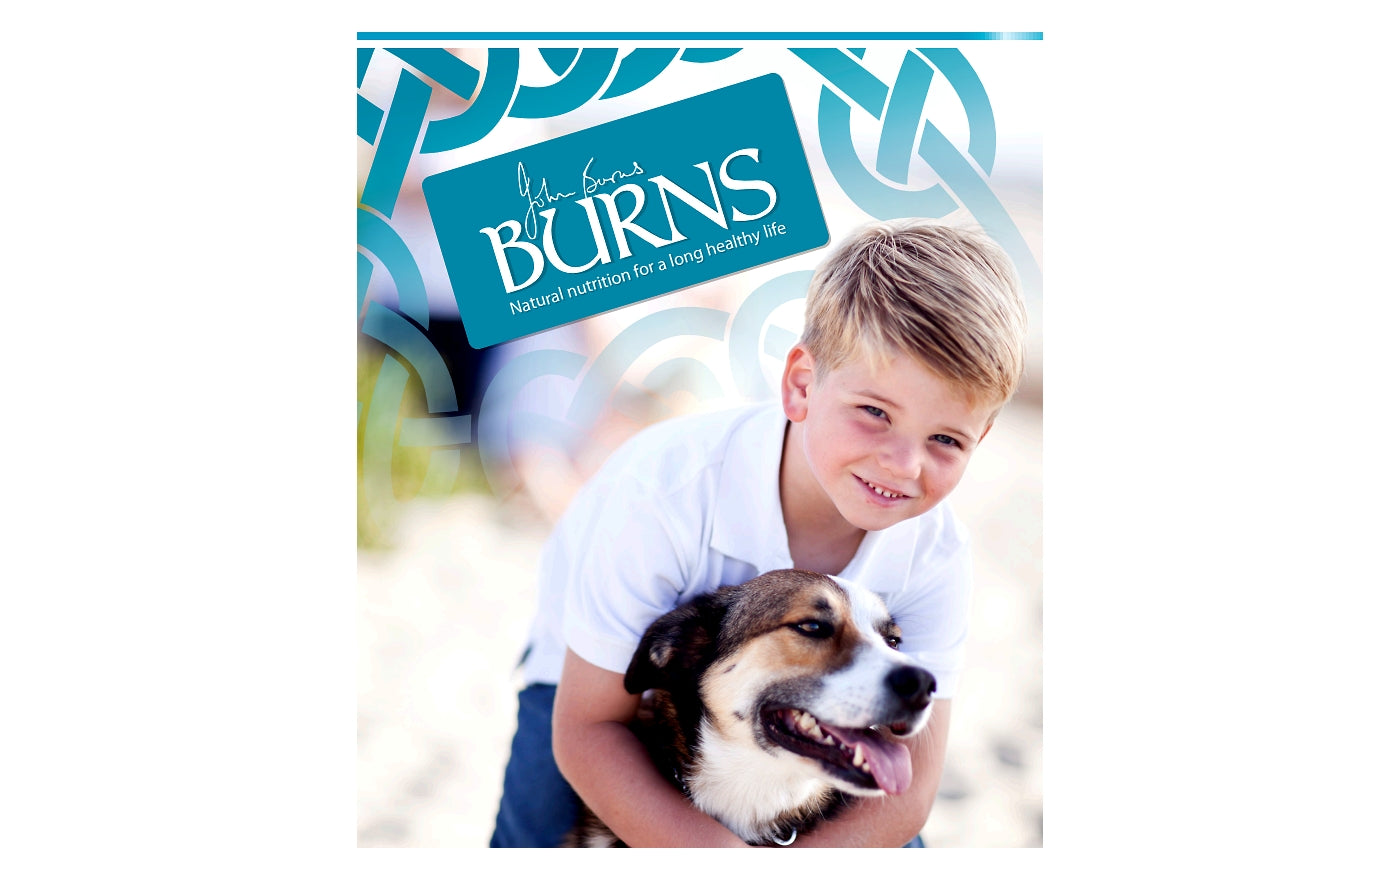 Burns - Adult/Senior Hypoallergenic Mixer Dog Food - 2kg